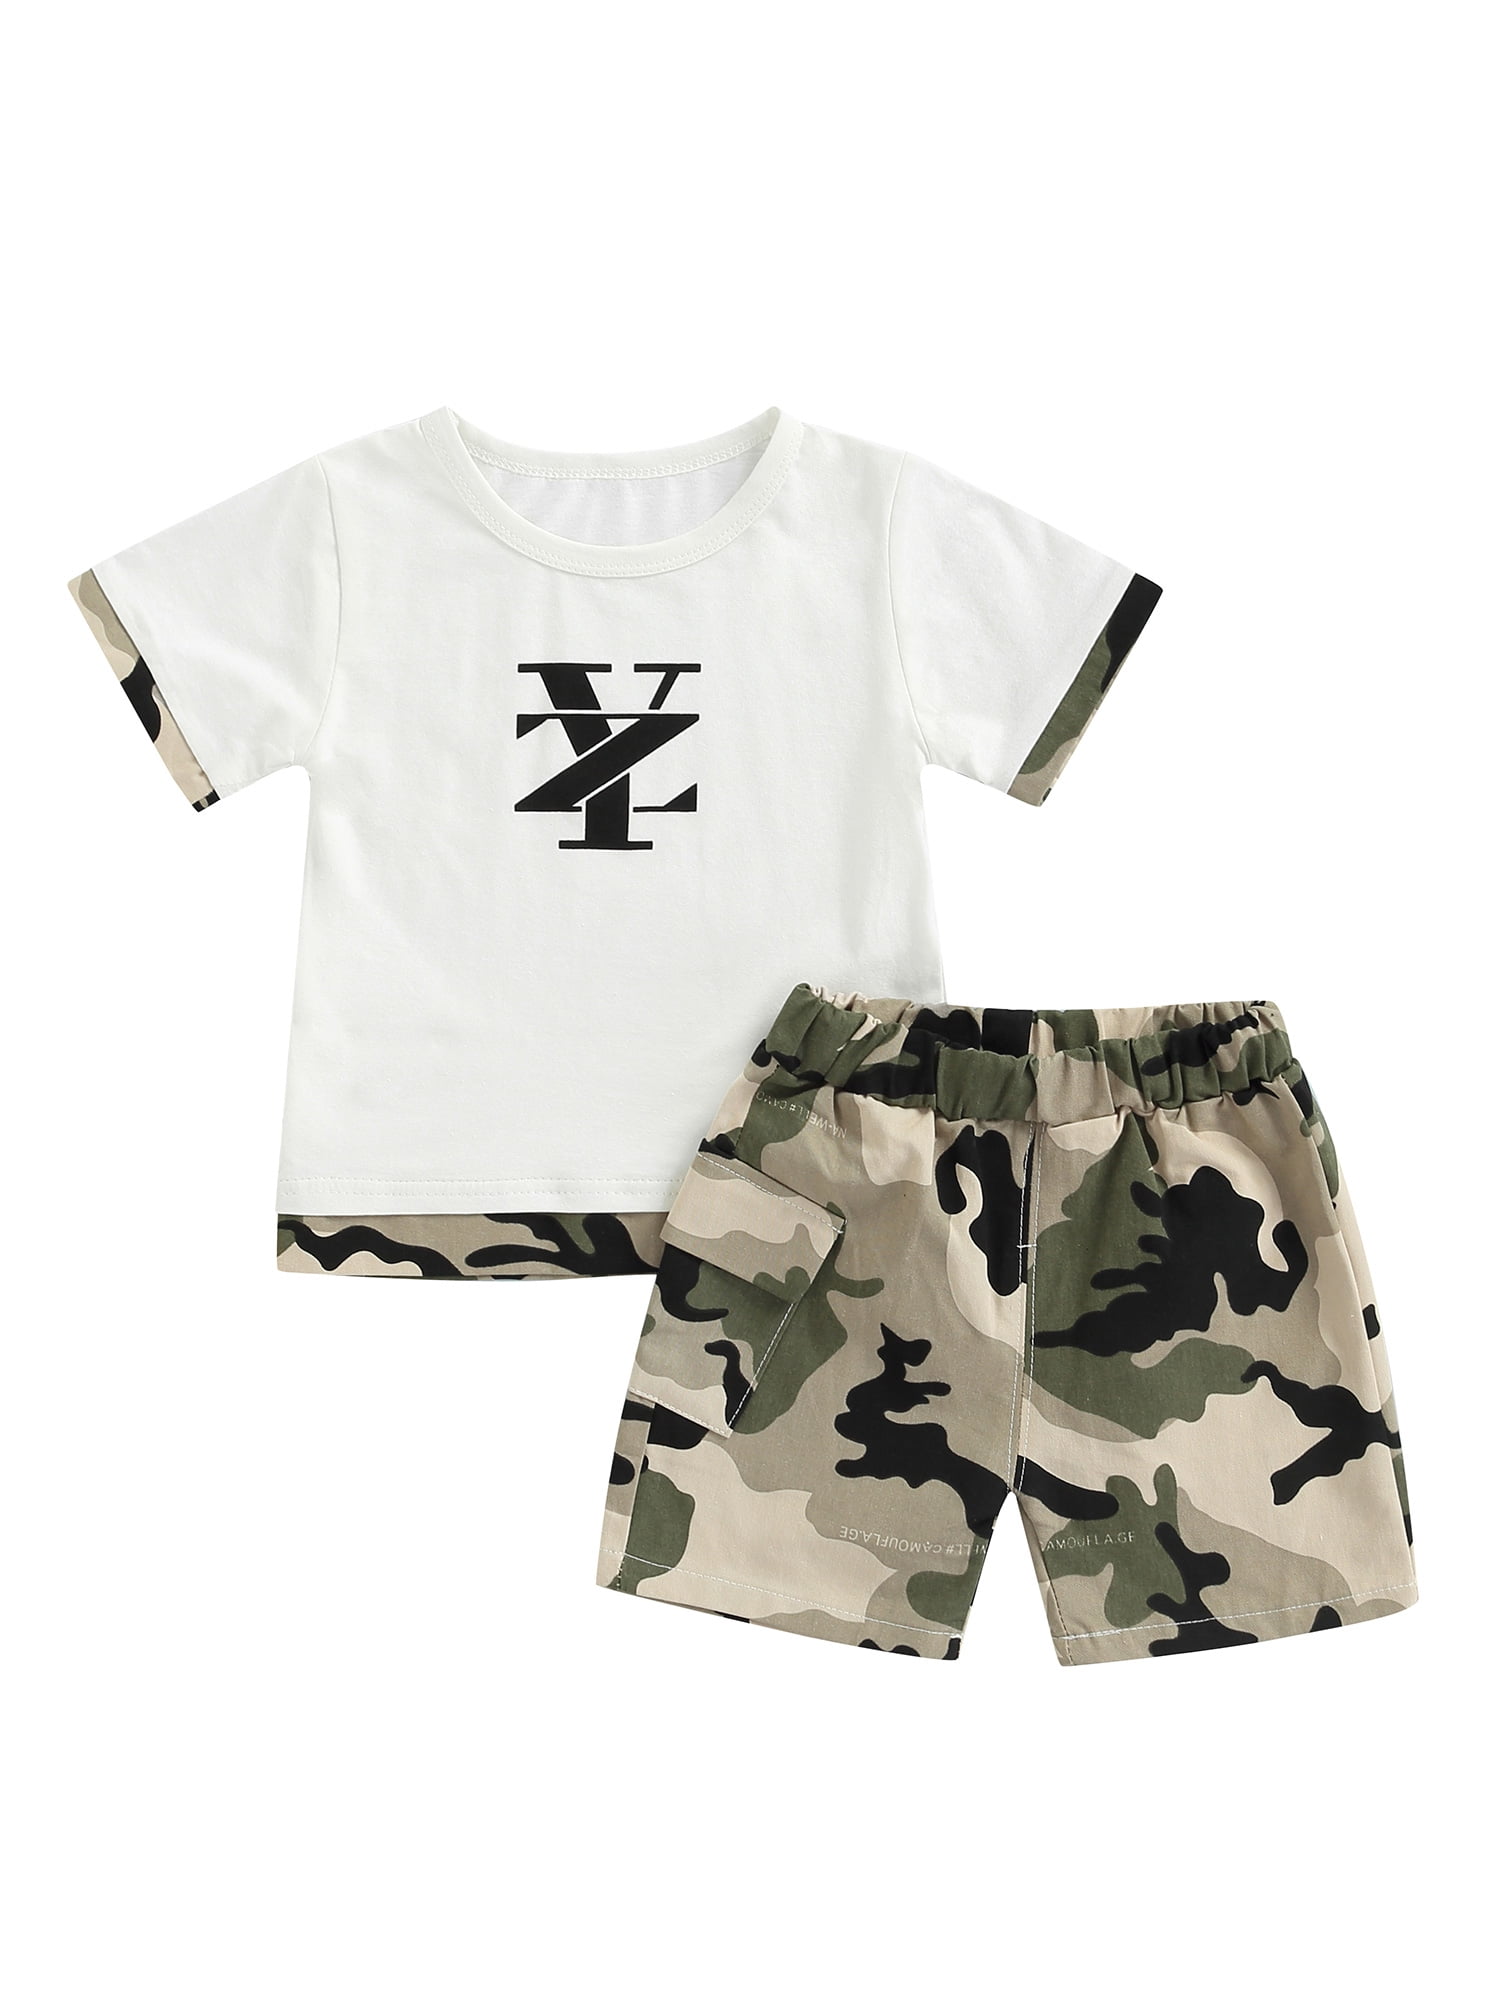 xkwyshop Toddler Kids Boys 2Pcs Outfit Letter Print Round Neck Short Sleeve  T-Shirt Camouflage Shorts Summer Set 